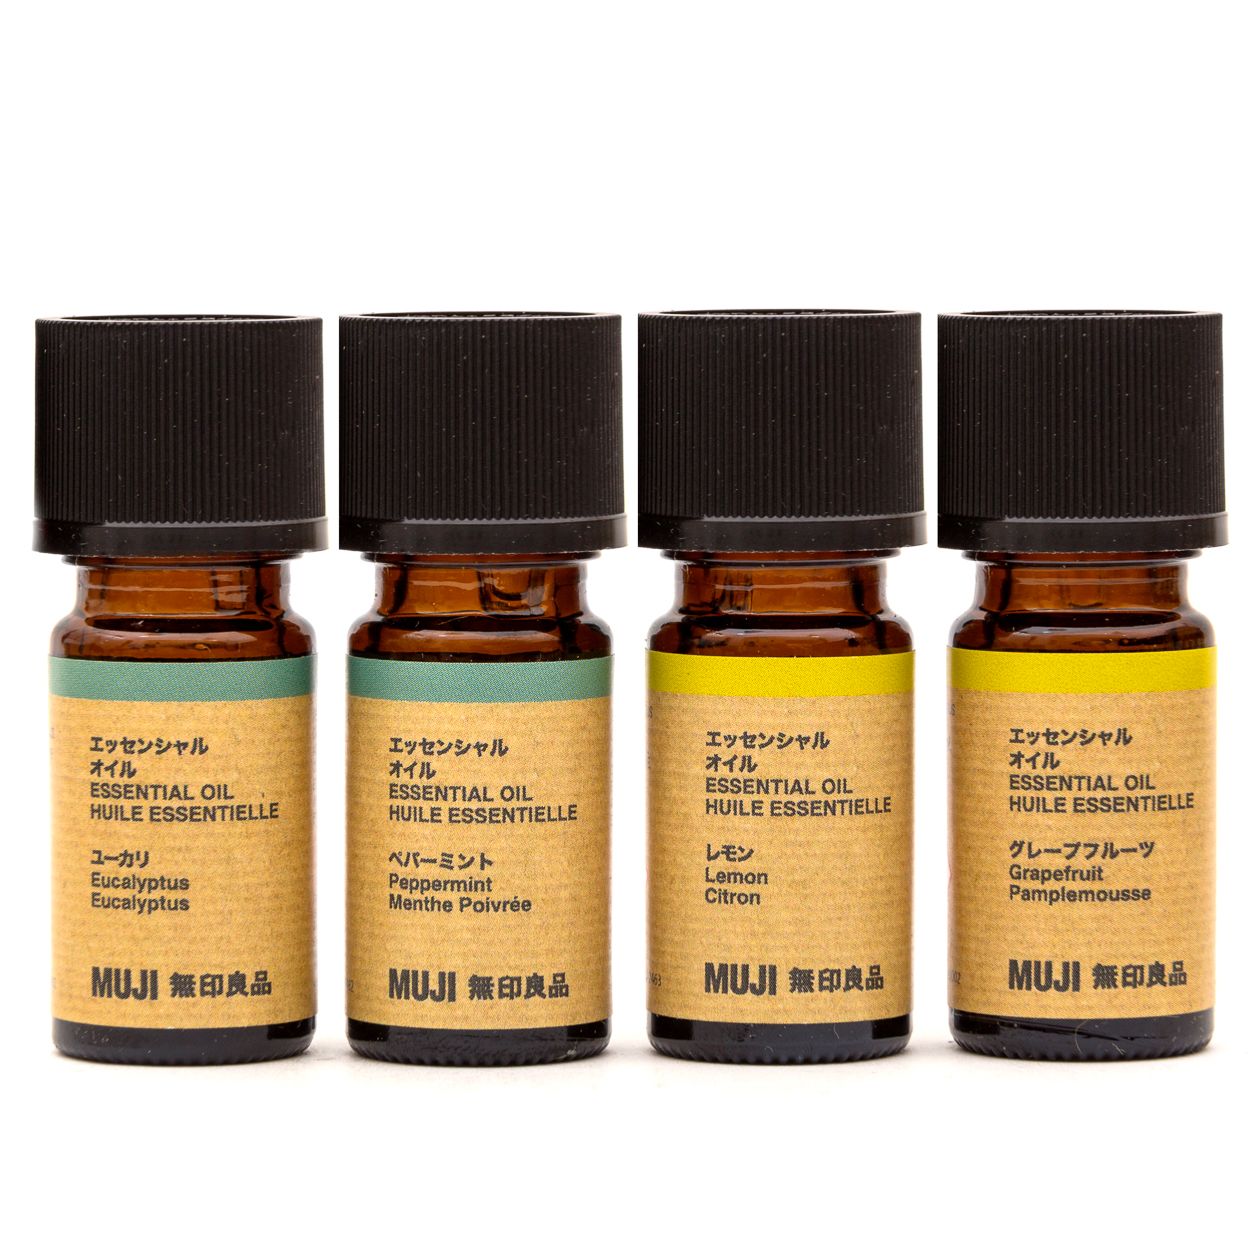 Refresh Essential Oil Gift Set of 4 oils 5ml